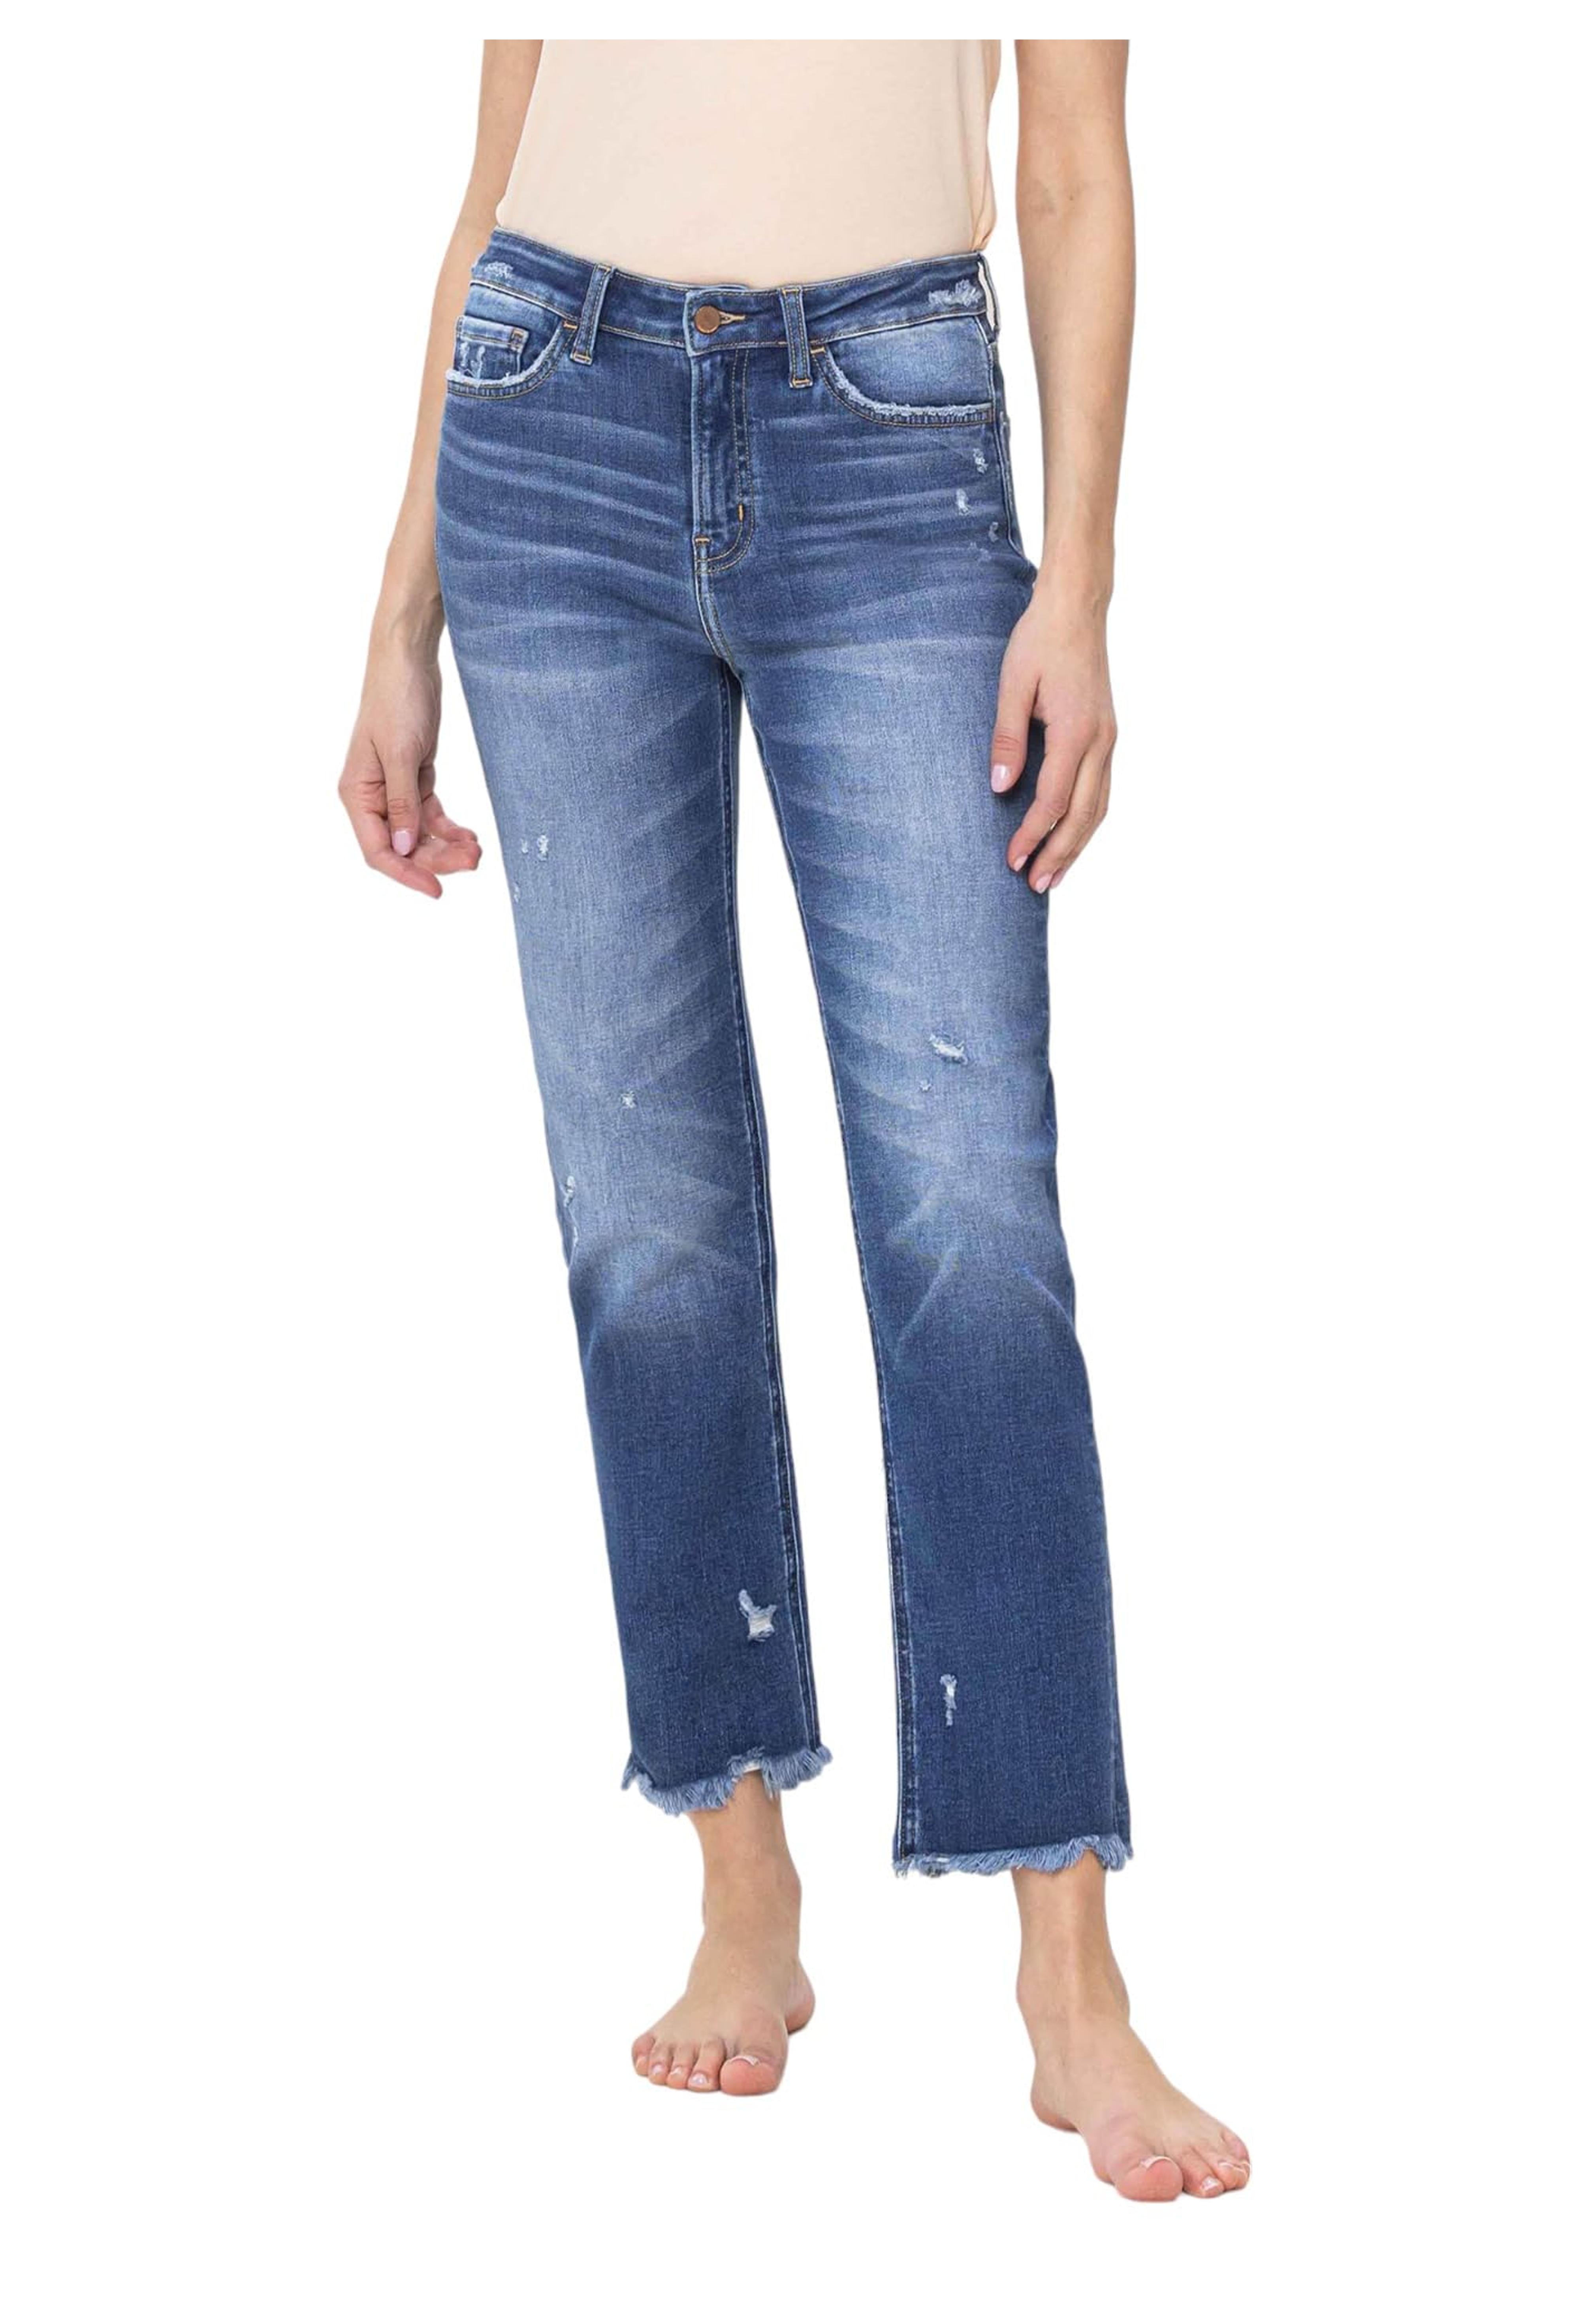 Flying Monkey High Rise Raw Hem Slim Straight Jeans Medium Blue F5243-30 at Amazon Women's Jeans store